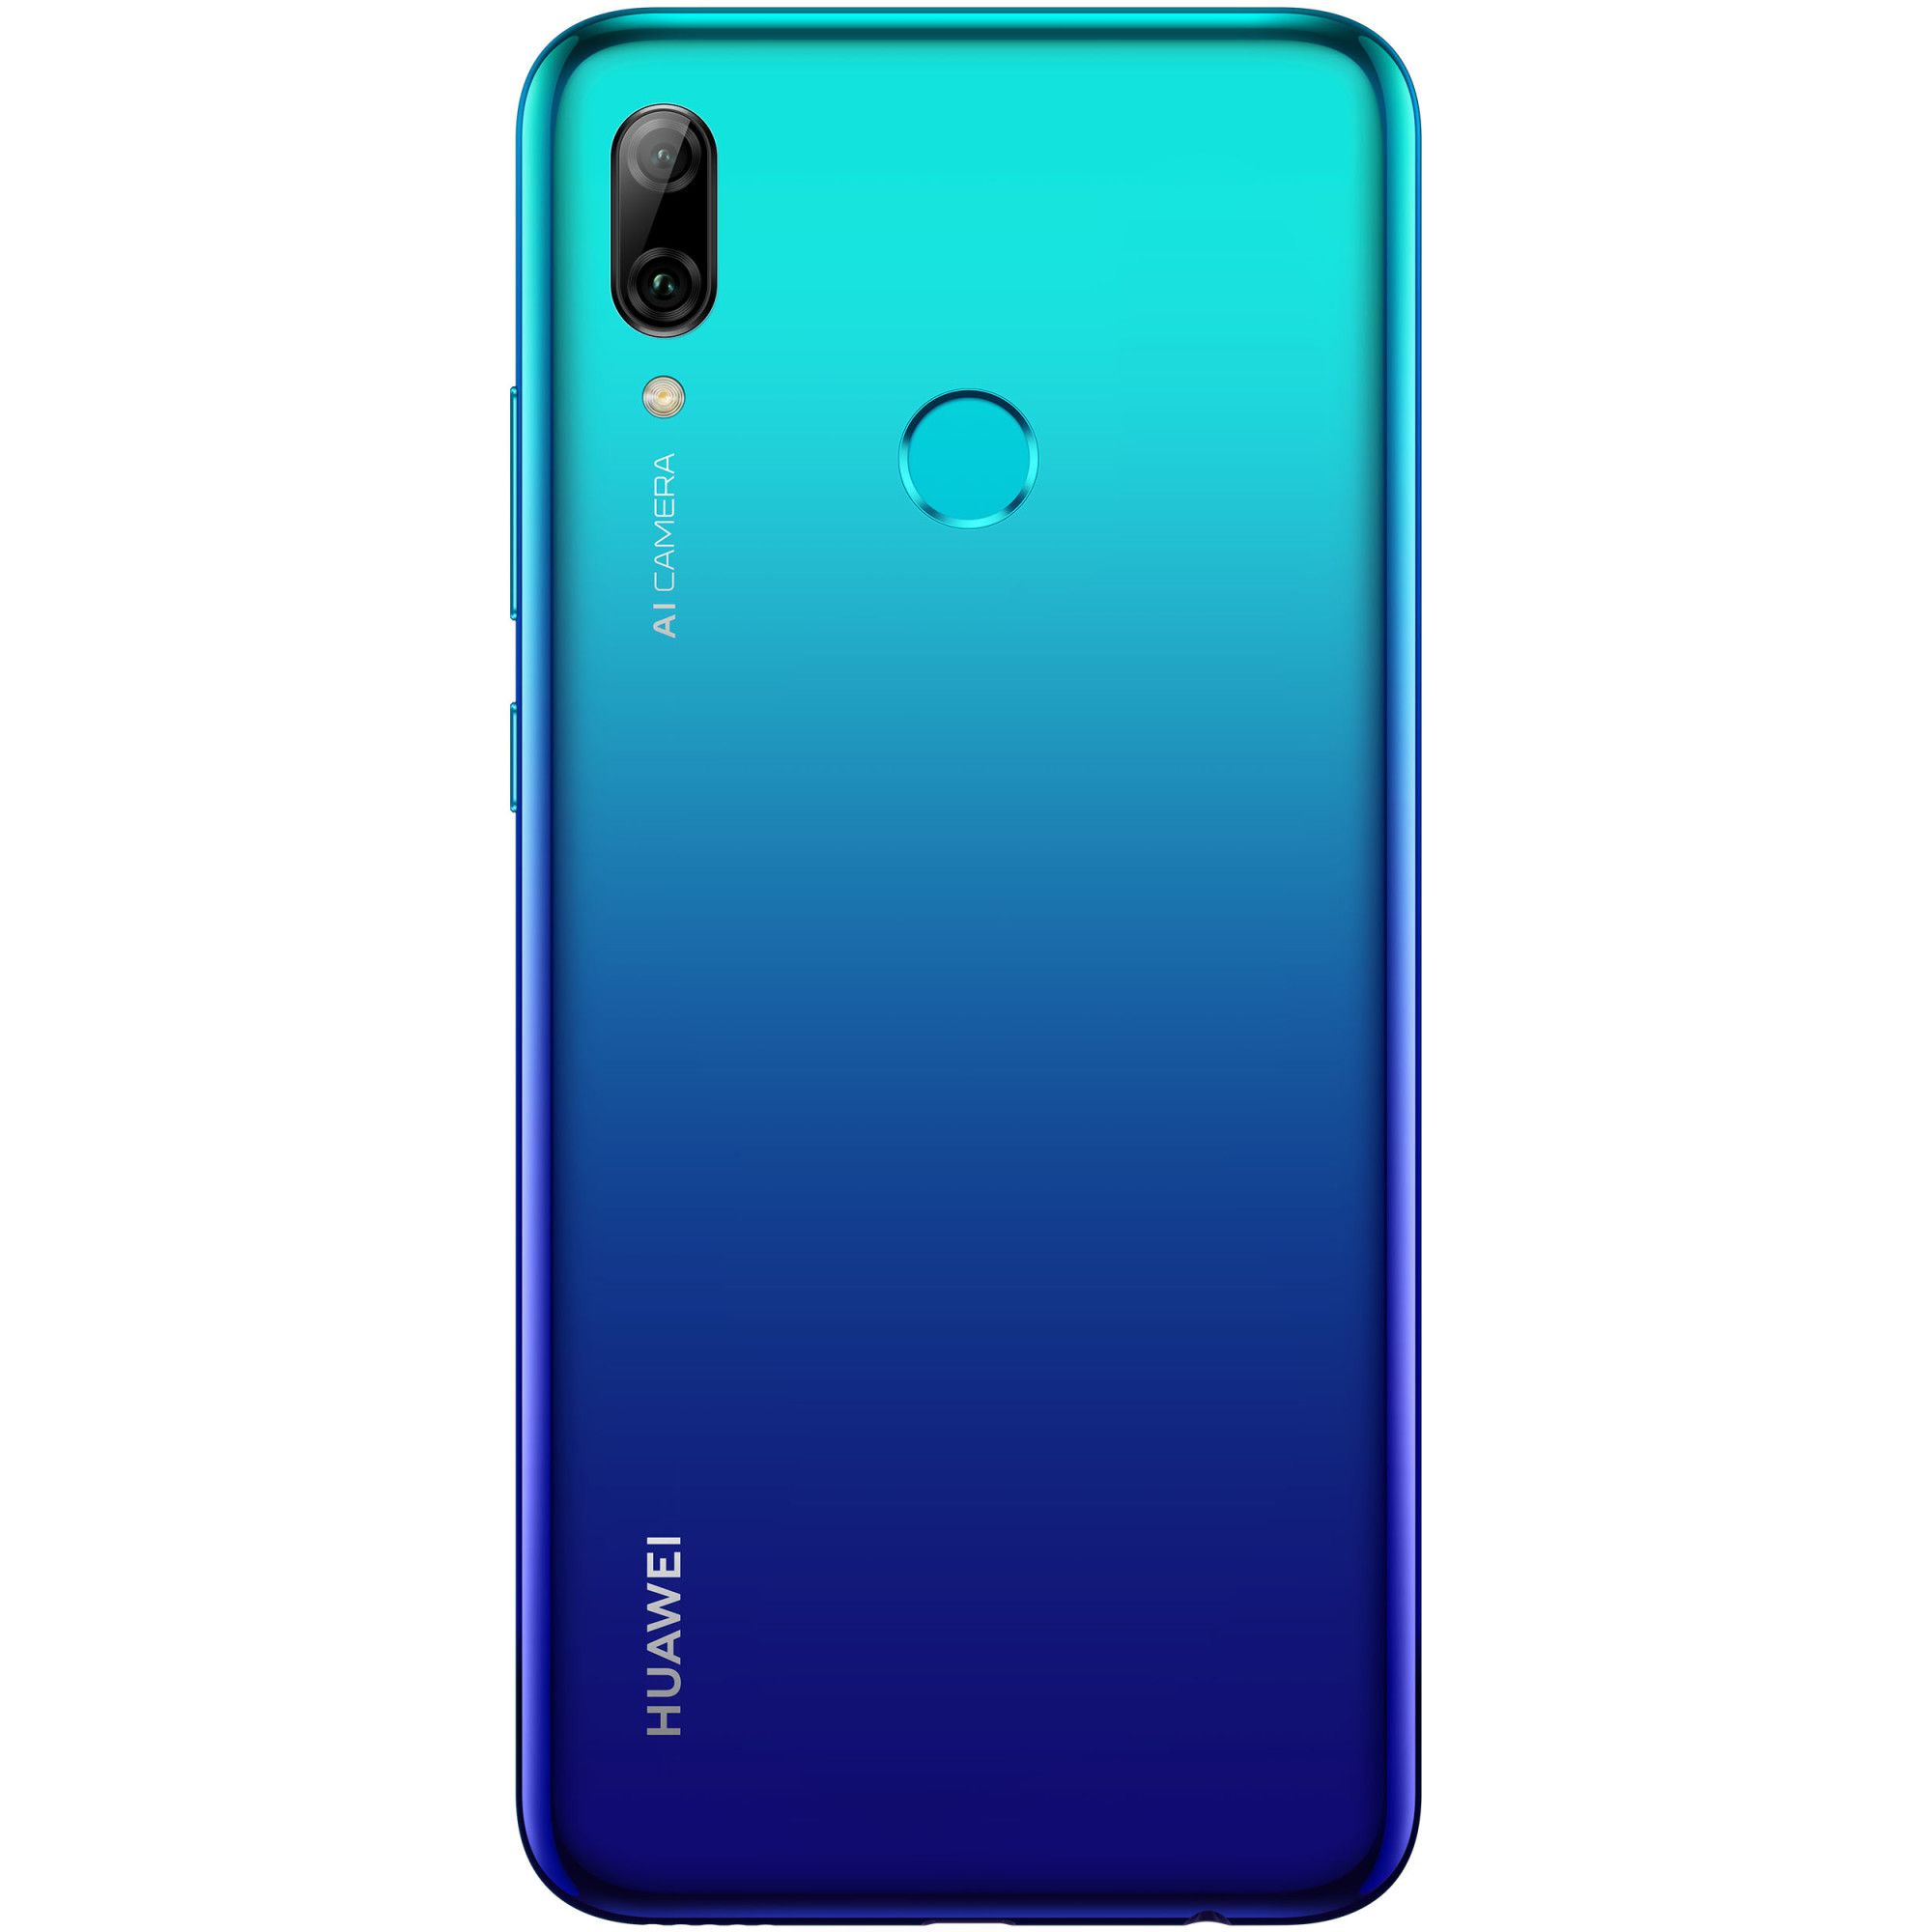 Oxideren Pakistaans kans Huawei P Smart 2019 specs, review, release date - PhonesData